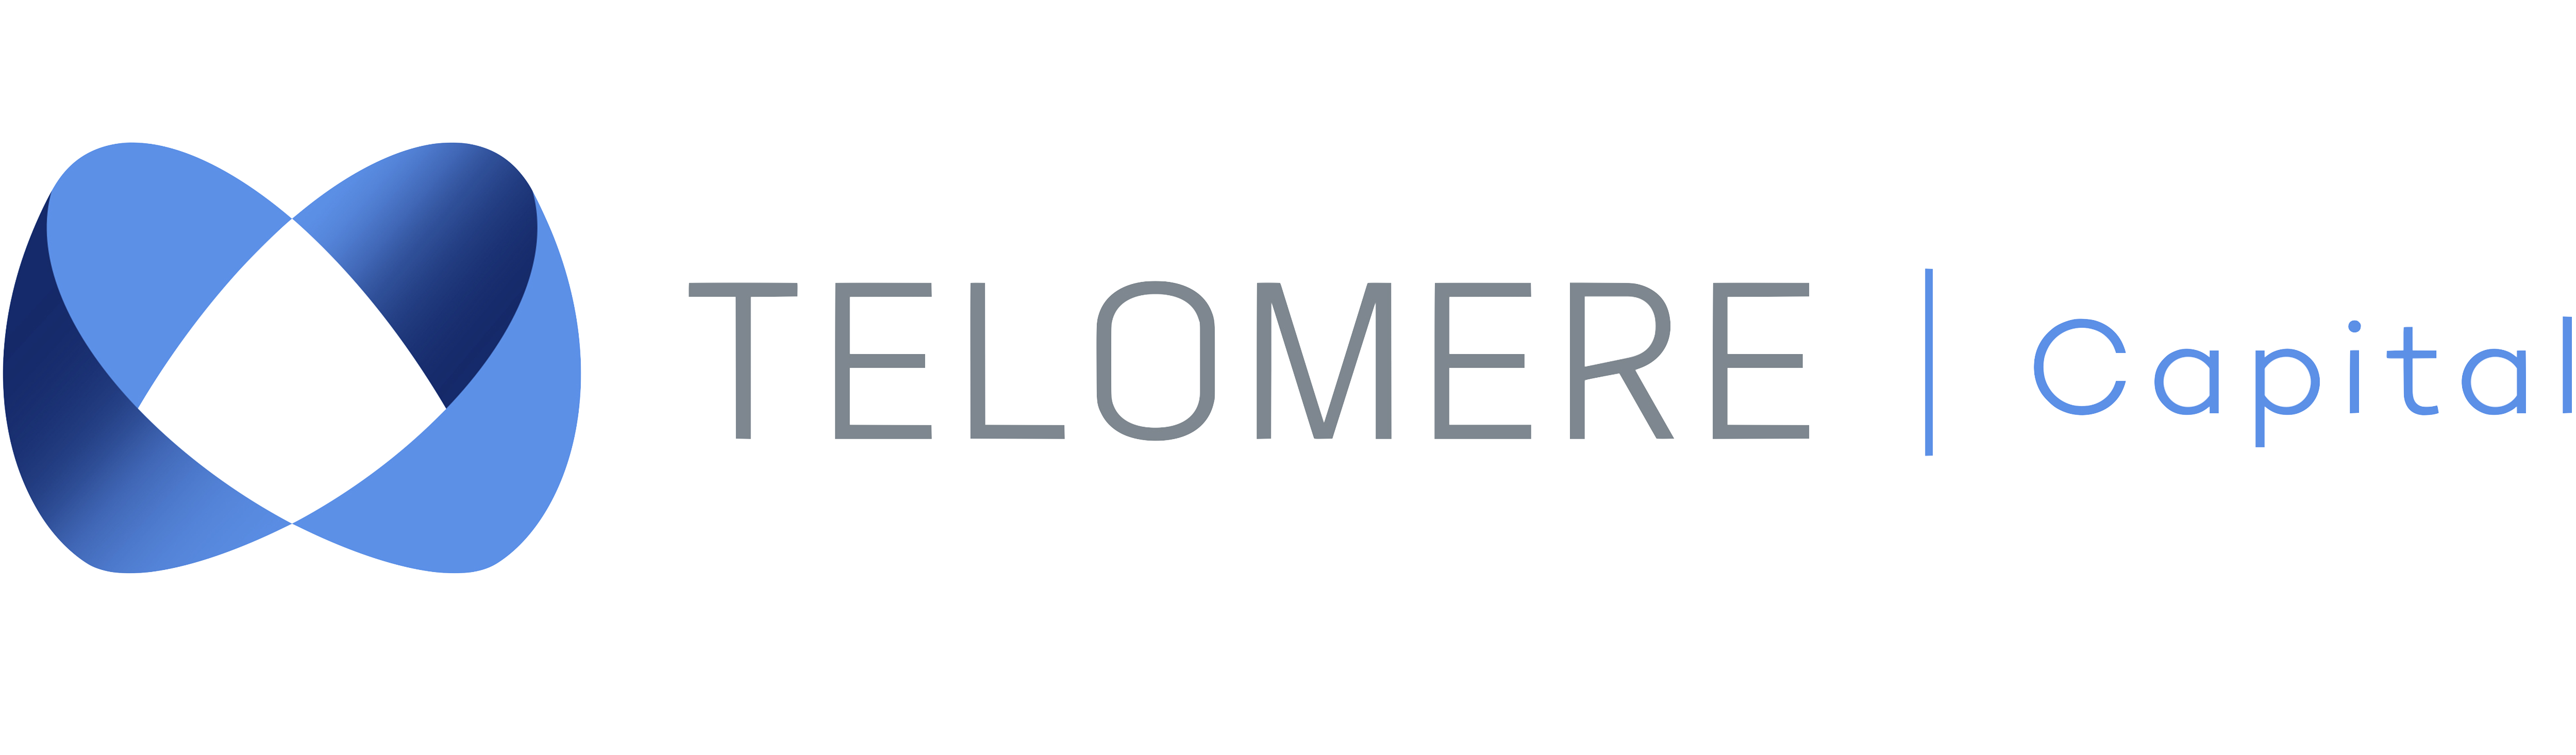 Telomerer